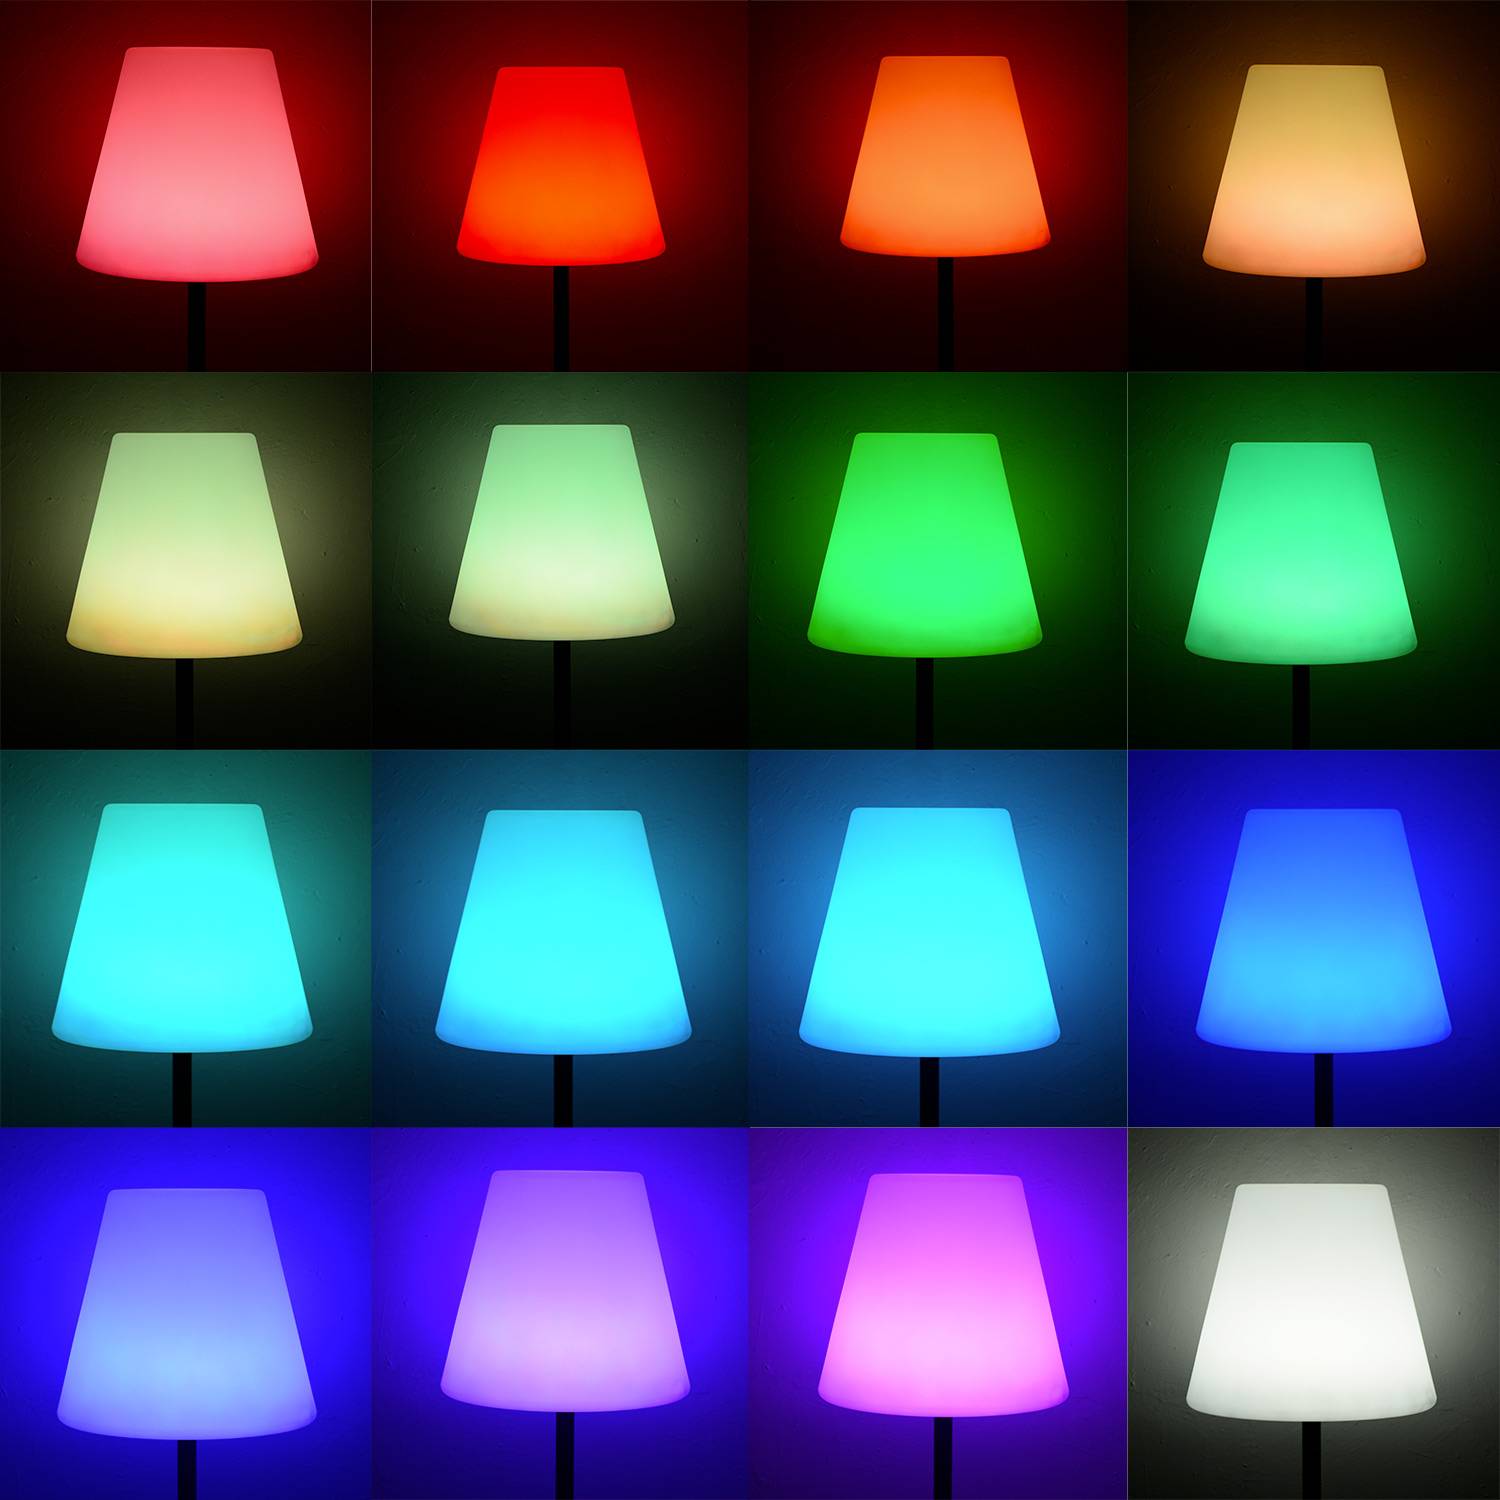 Staande lamp voor buiten 100 cm LAMPADA L LED hybride, multicolor staande lamp, design op batterij, zonne-energie, afstandsbediening Photo6